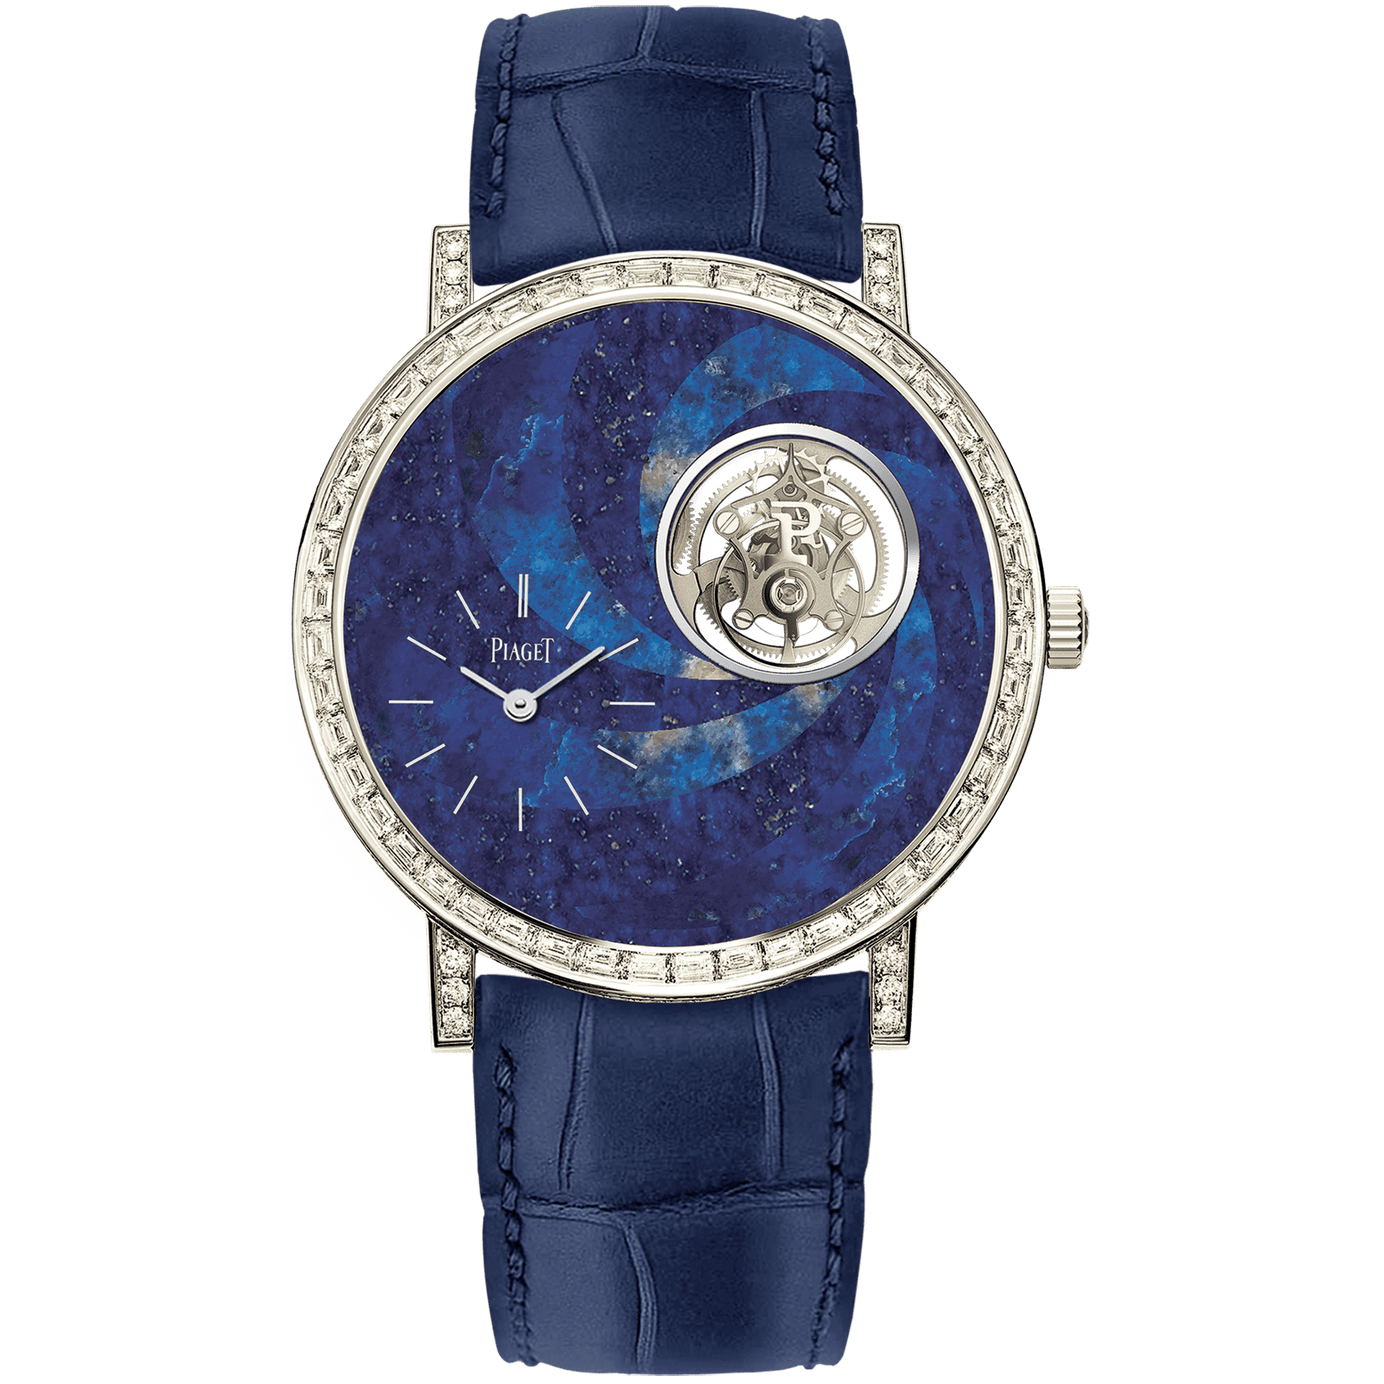 Piaget White Gold Diamond Ultra-Thin Tourbillon Watch G0A43031